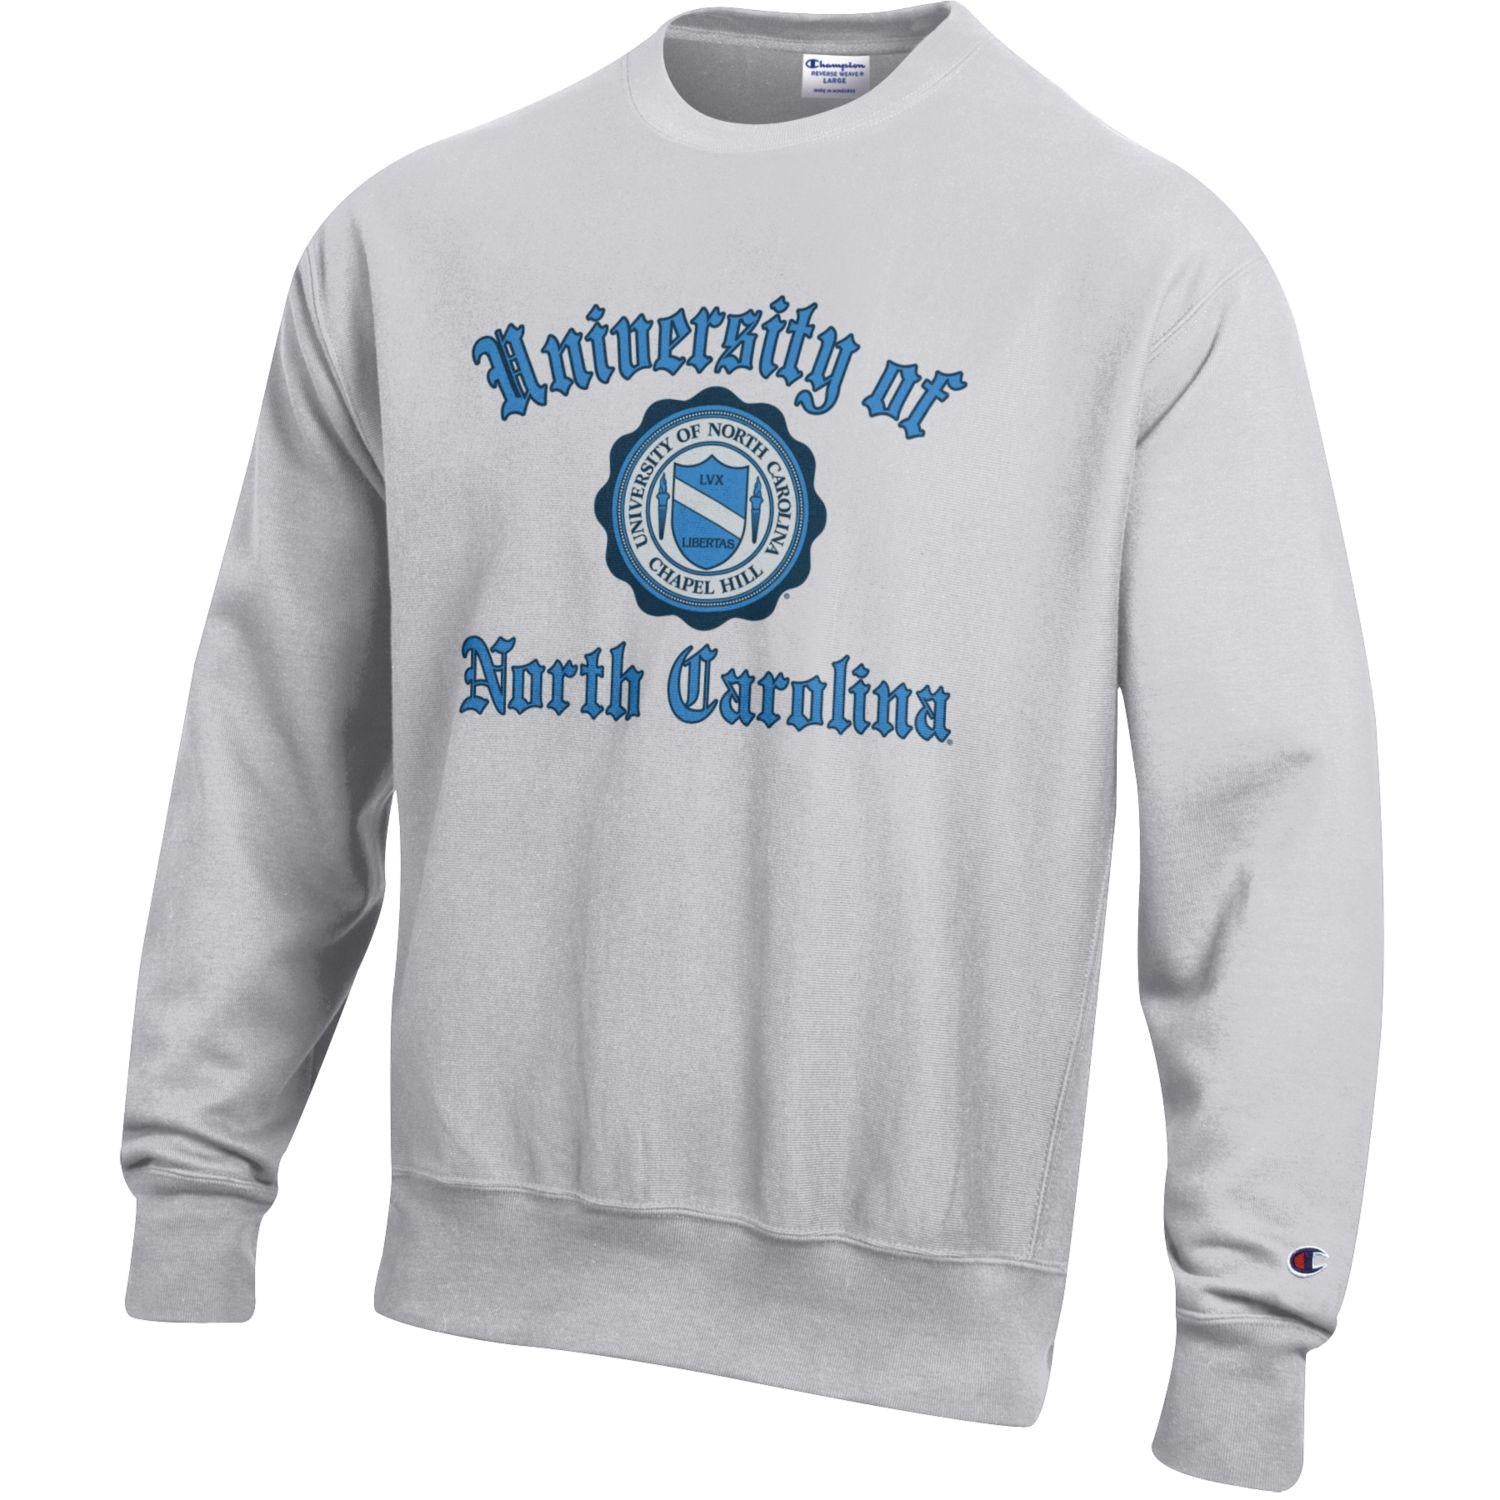 UNC Logo Sweatshirt, Carolina College Sweatshirt, Vintage Carolina